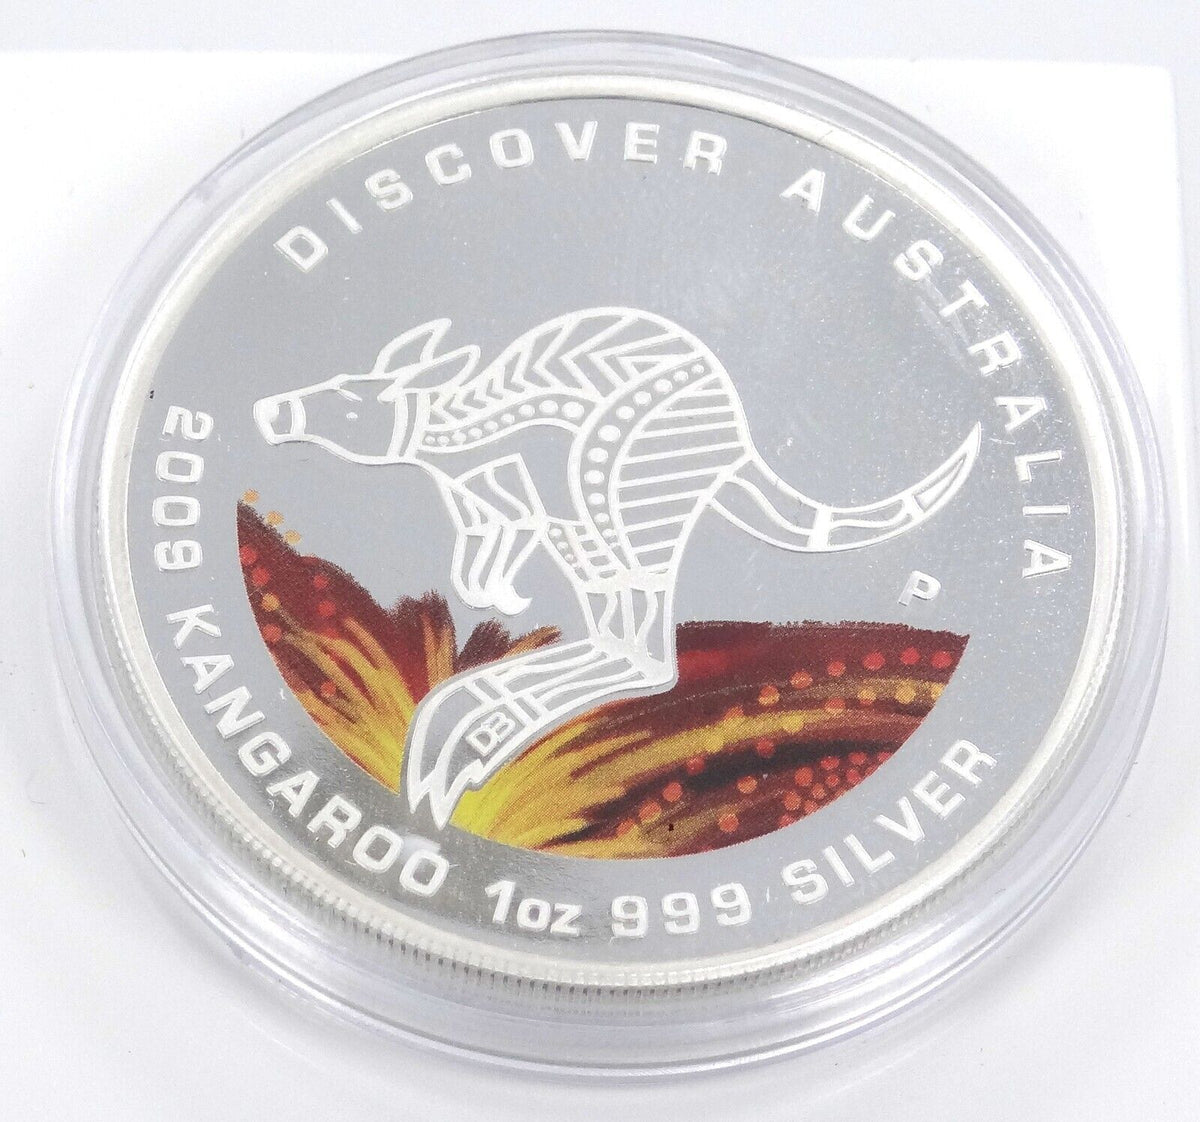 1 Oz Silver Coin 2009 $1 Australia Discover Australia Proof Coin - Kangaroo-classypw.com-1